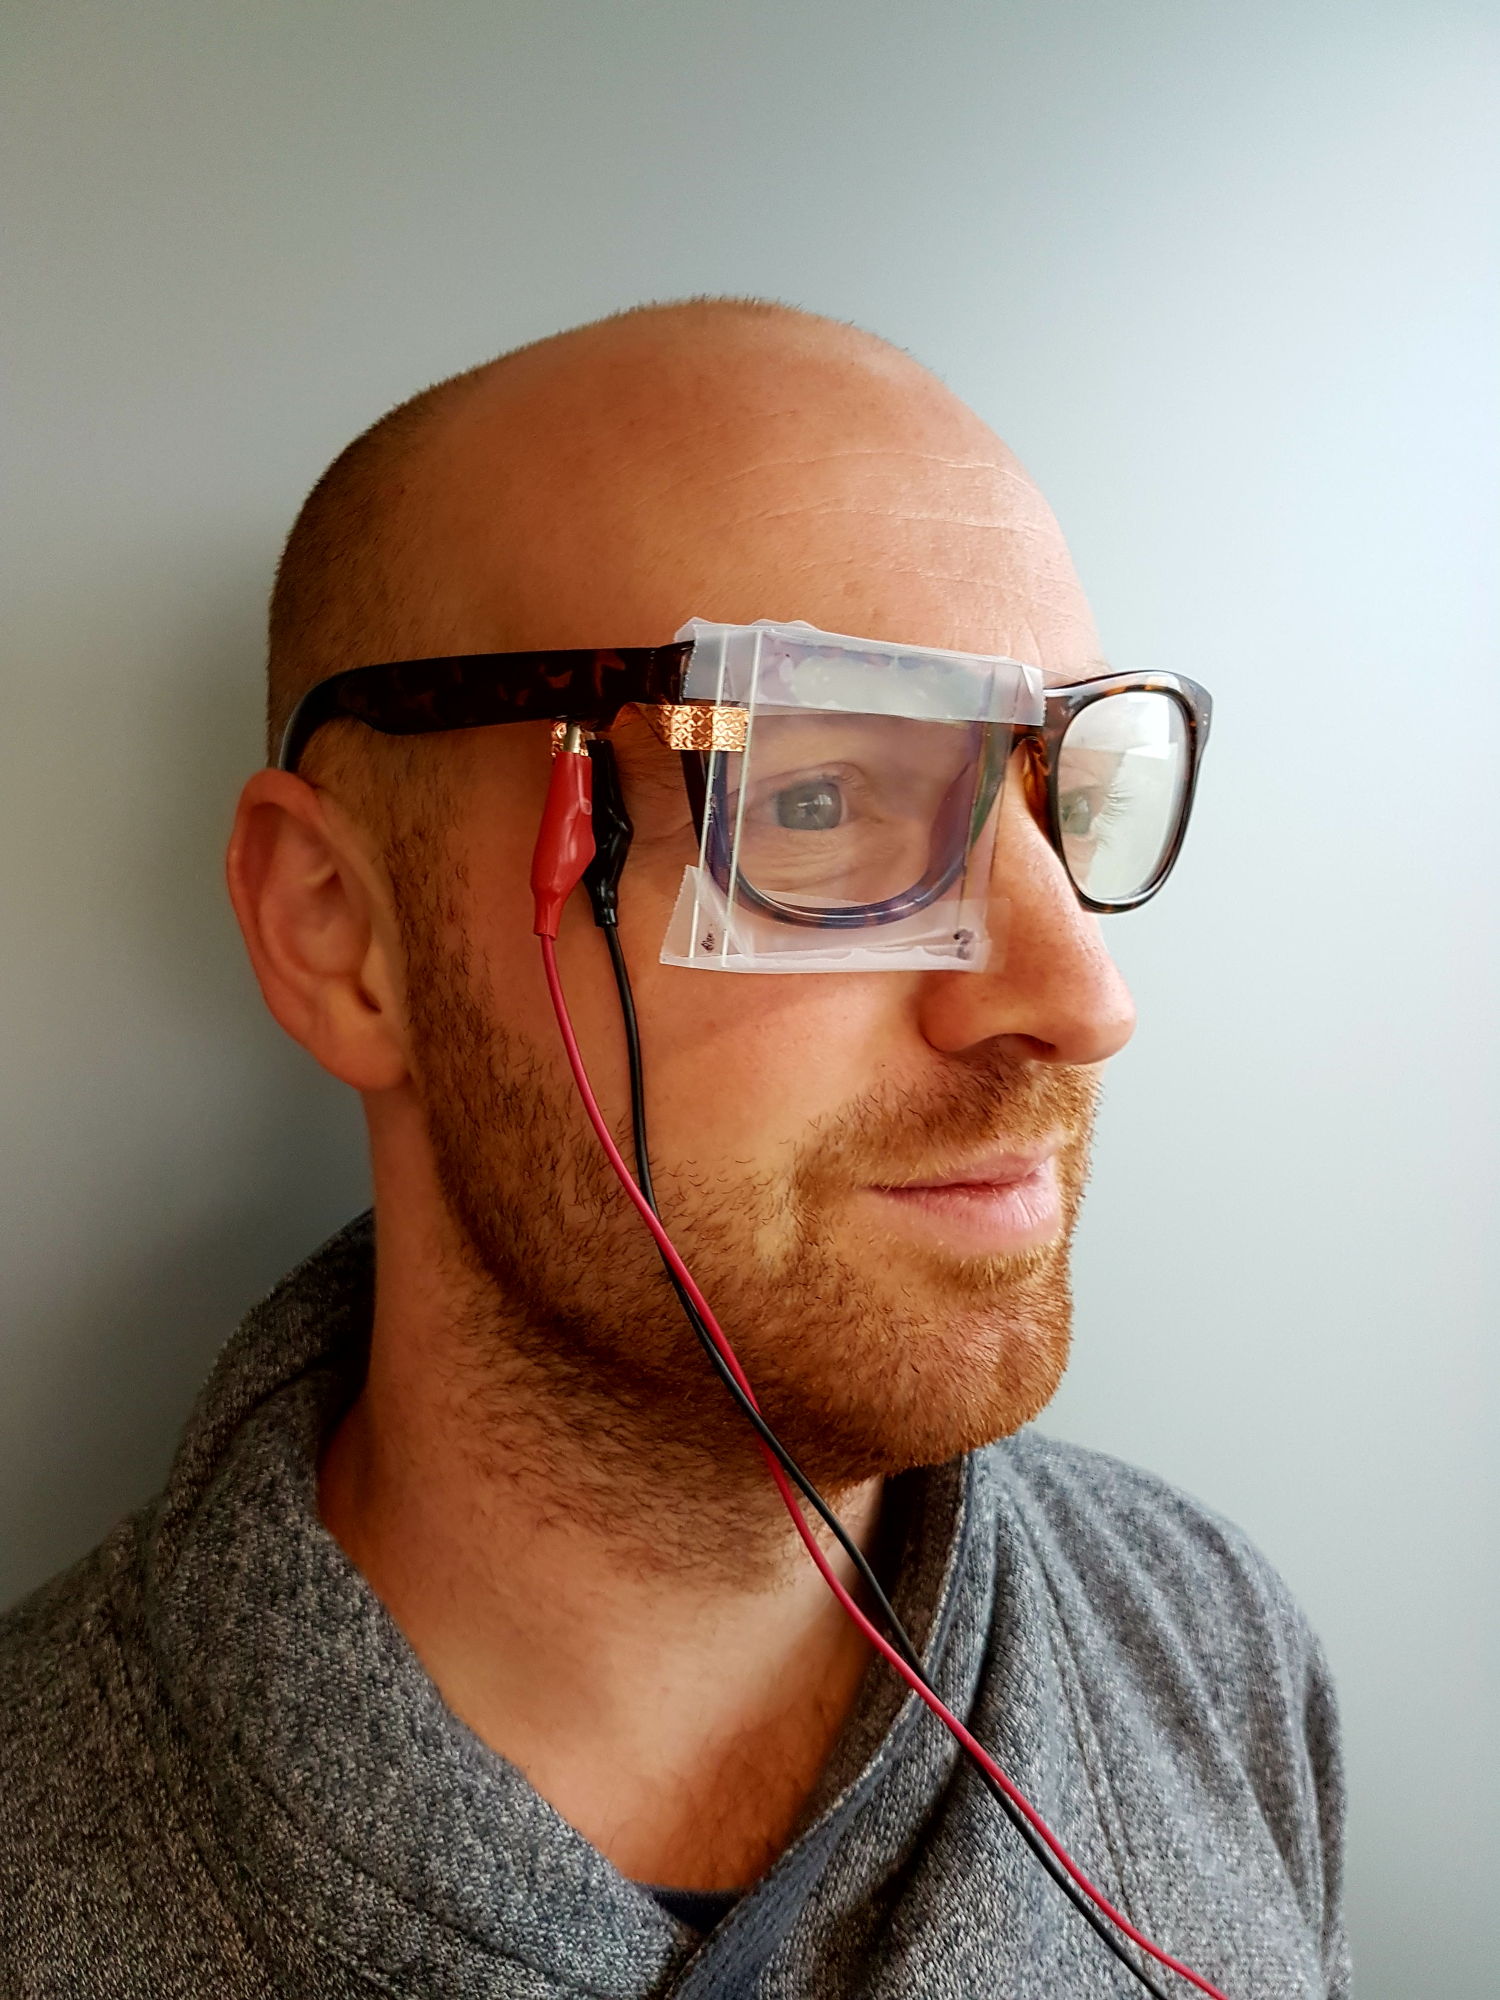 Ontwikkeling digitale bril